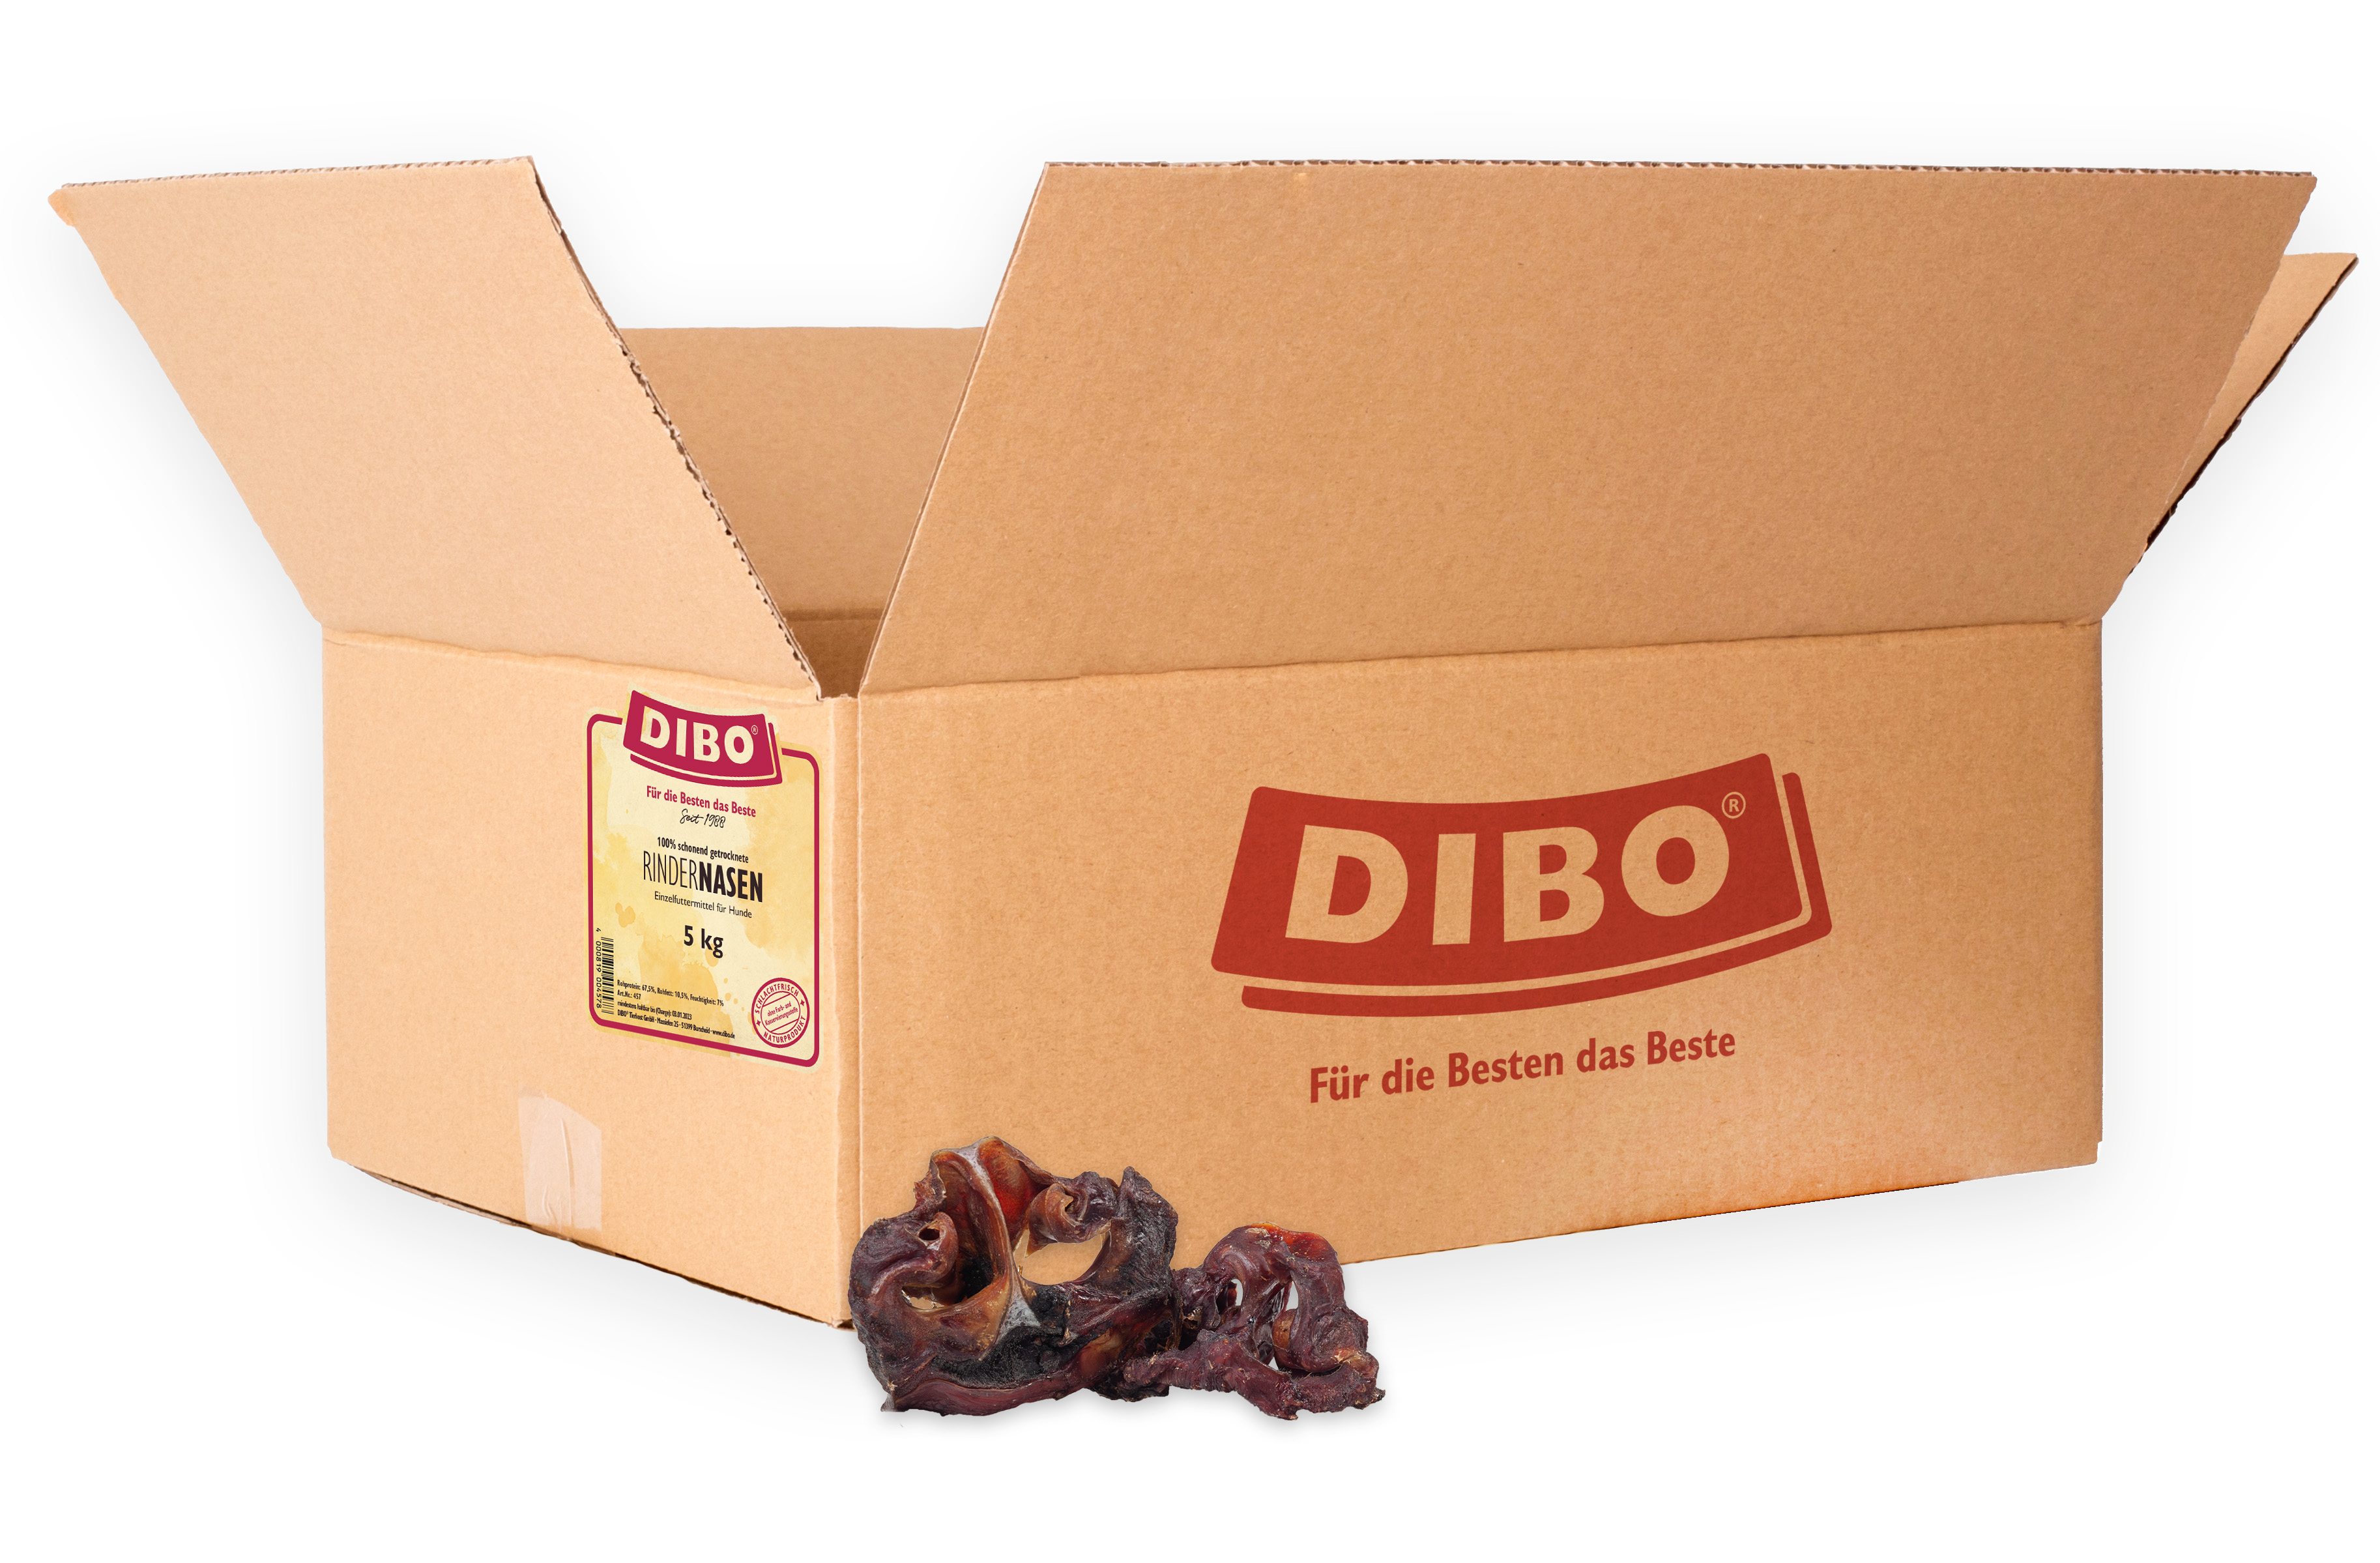 DIBO Rinder-Nasen, 5kg-Karton